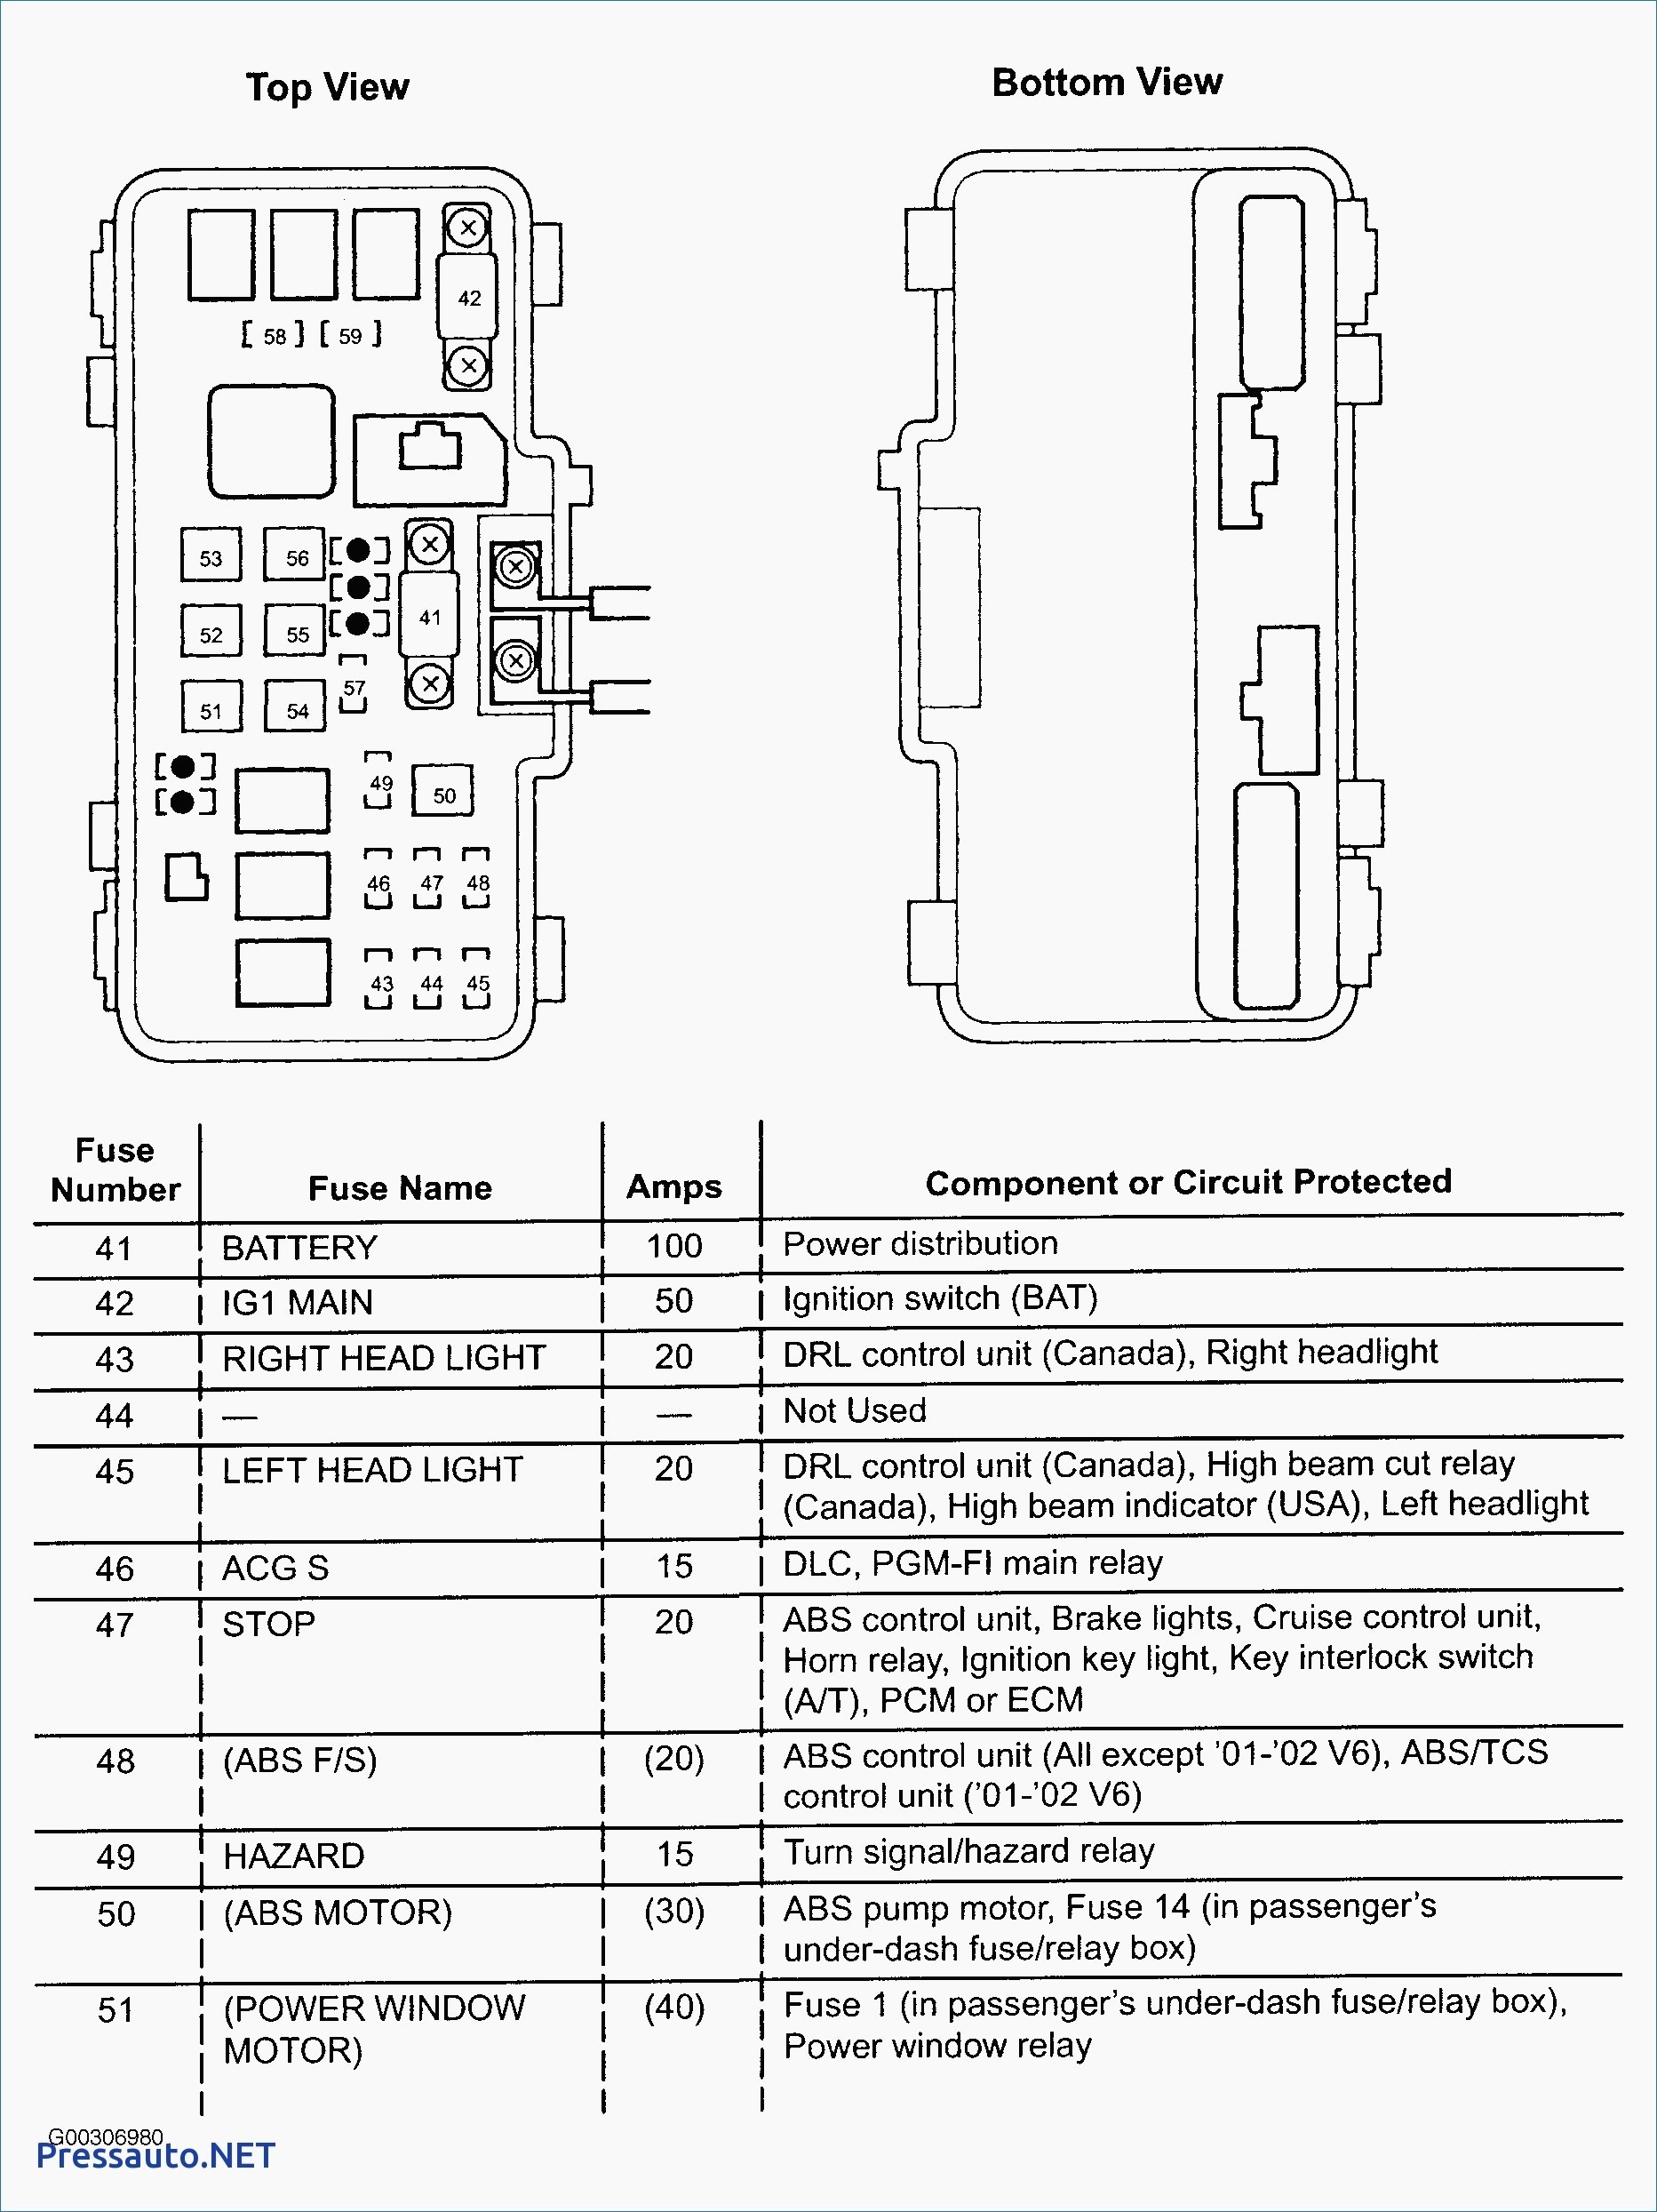 1994 Honda Civic Engine Diagram 2004 Honda Accord Engine Diagram Honda Accord 1994 Engine Diagram Of 1994 Honda Civic Engine Diagram